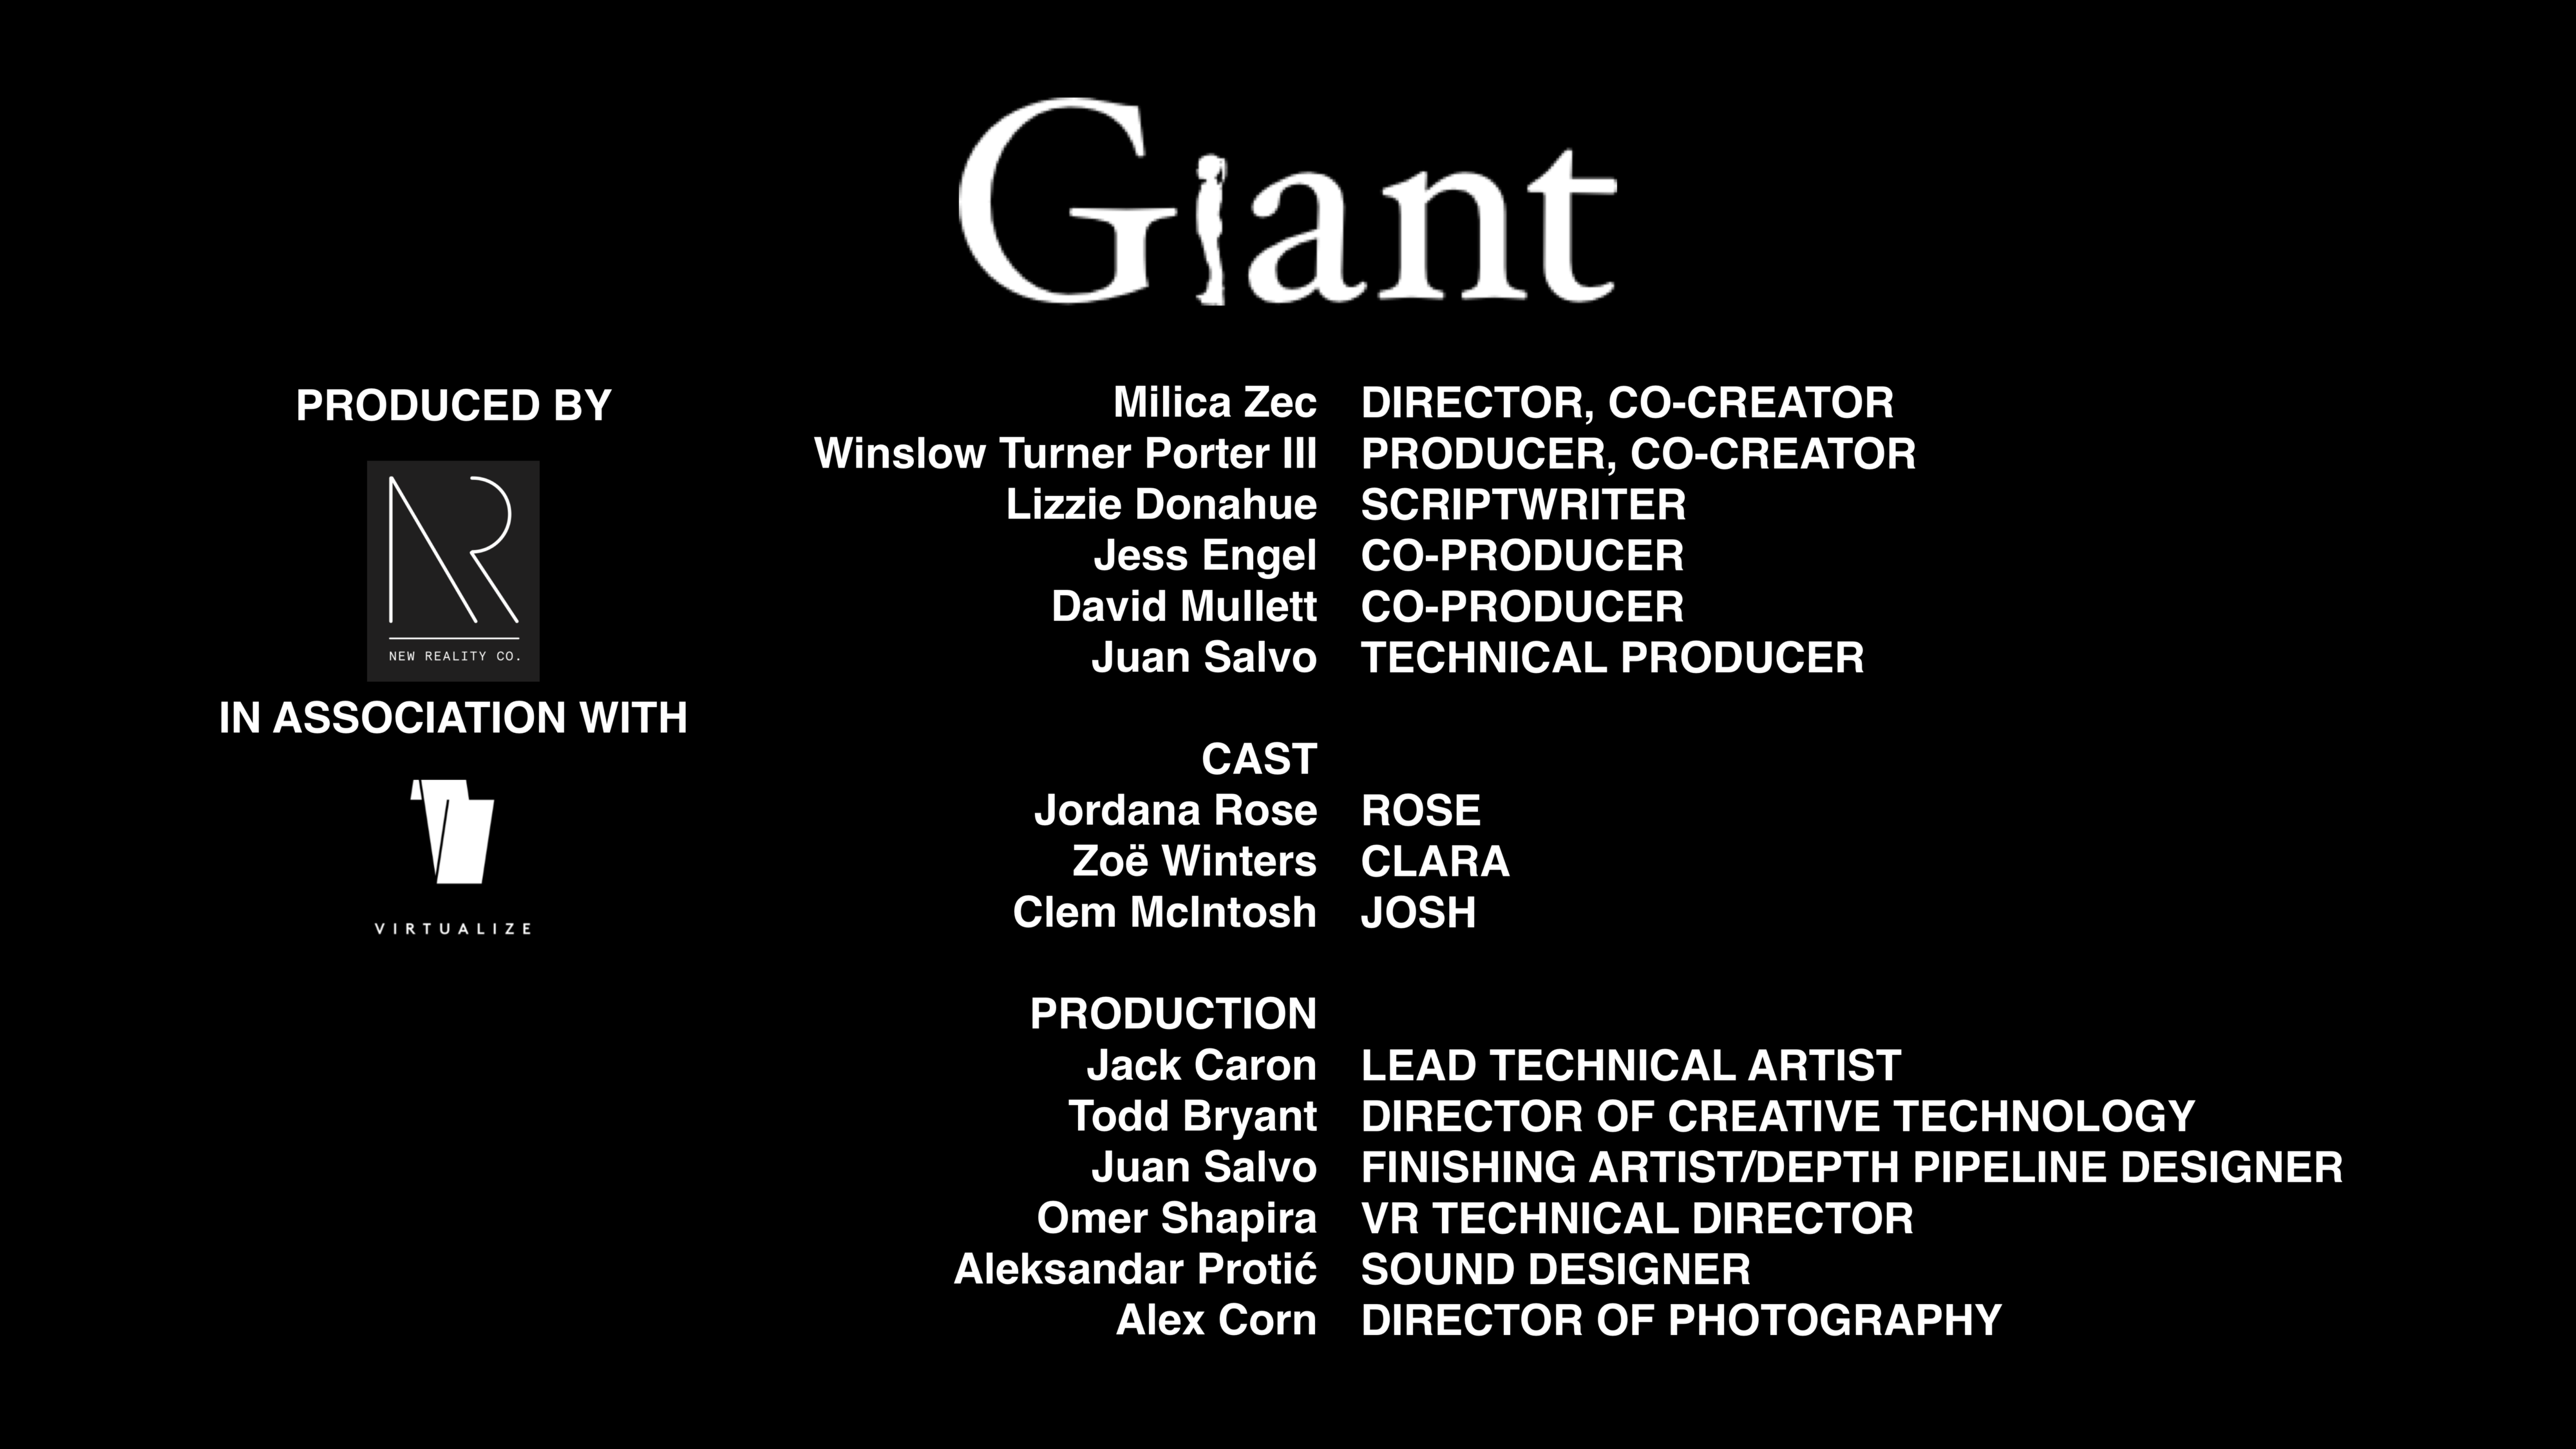 Giant credits